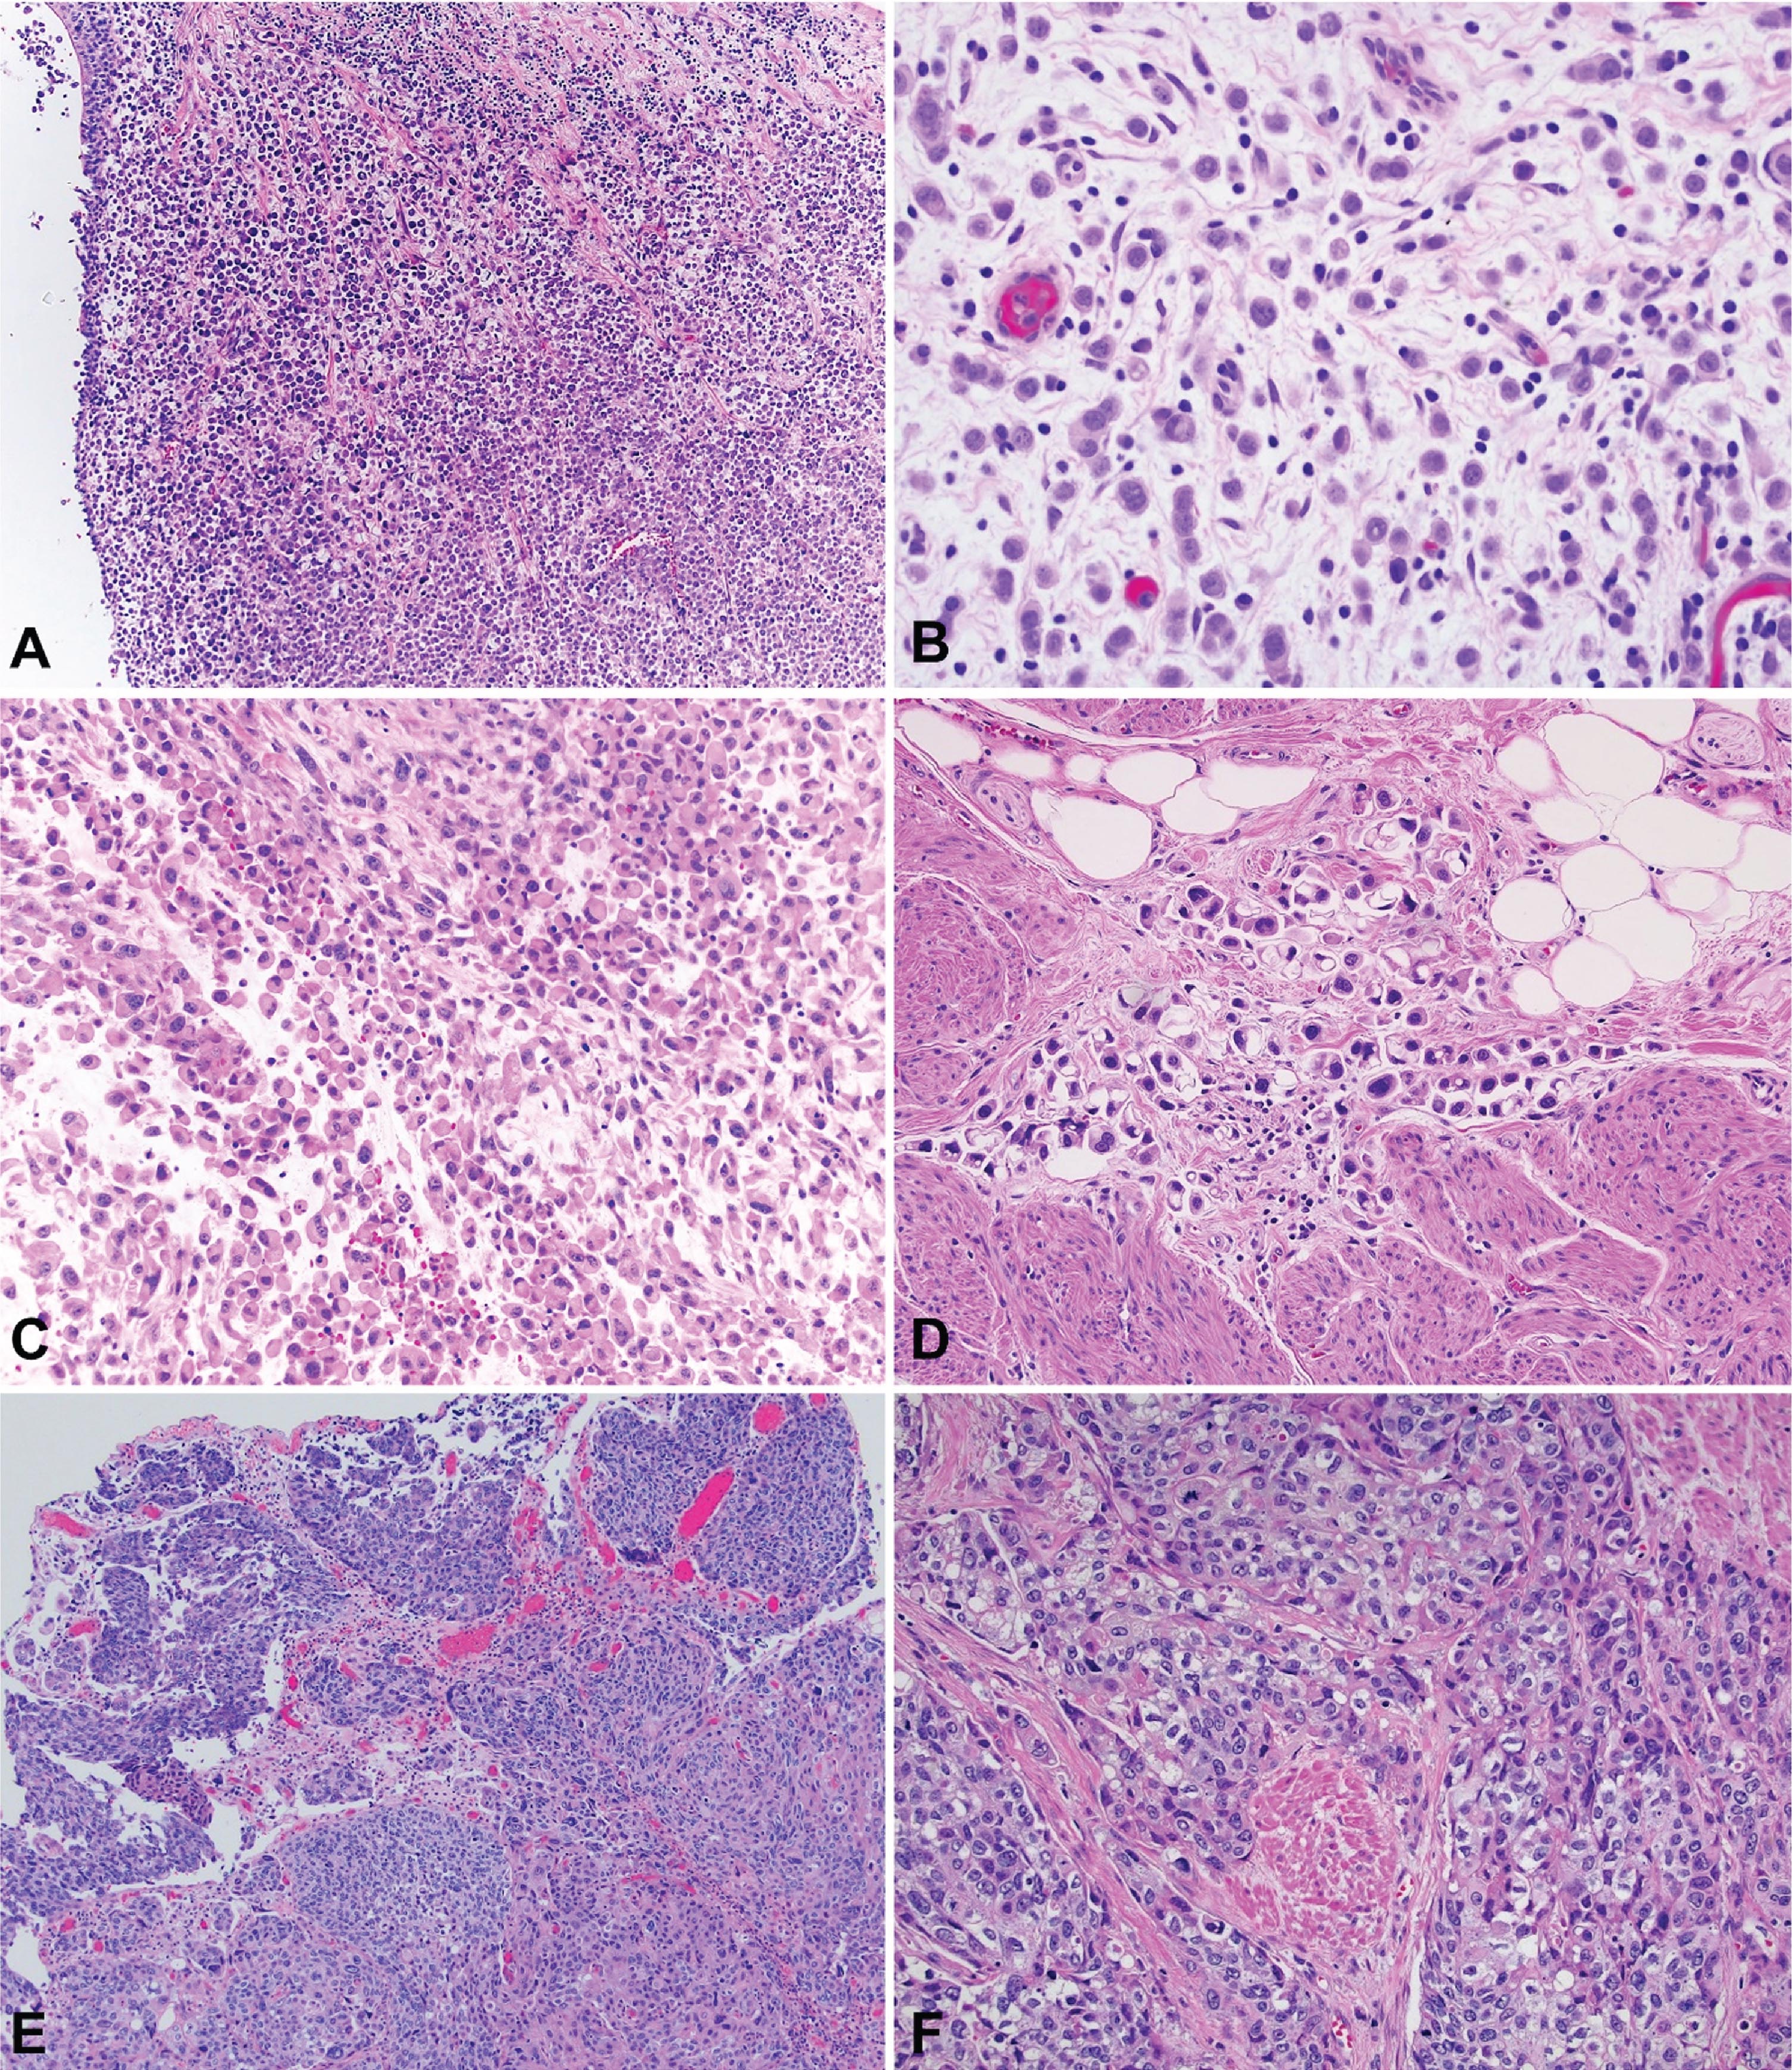 Photomicrography of bladder tumors. A – Plasmacytoid urothelial carcinoma (40x). B - Plasmacytoid urothelial carcinoma (200x). C – Plasmacytoid urothelial carcinoma with rhabdoid features (100x). D – Plasmacytoid urothelial carcinoma with signet ring features (200x). E – Conventional urothelial carcinoma (40x). F – Conventional urothelial carcinoma with muscle invasion (100x).